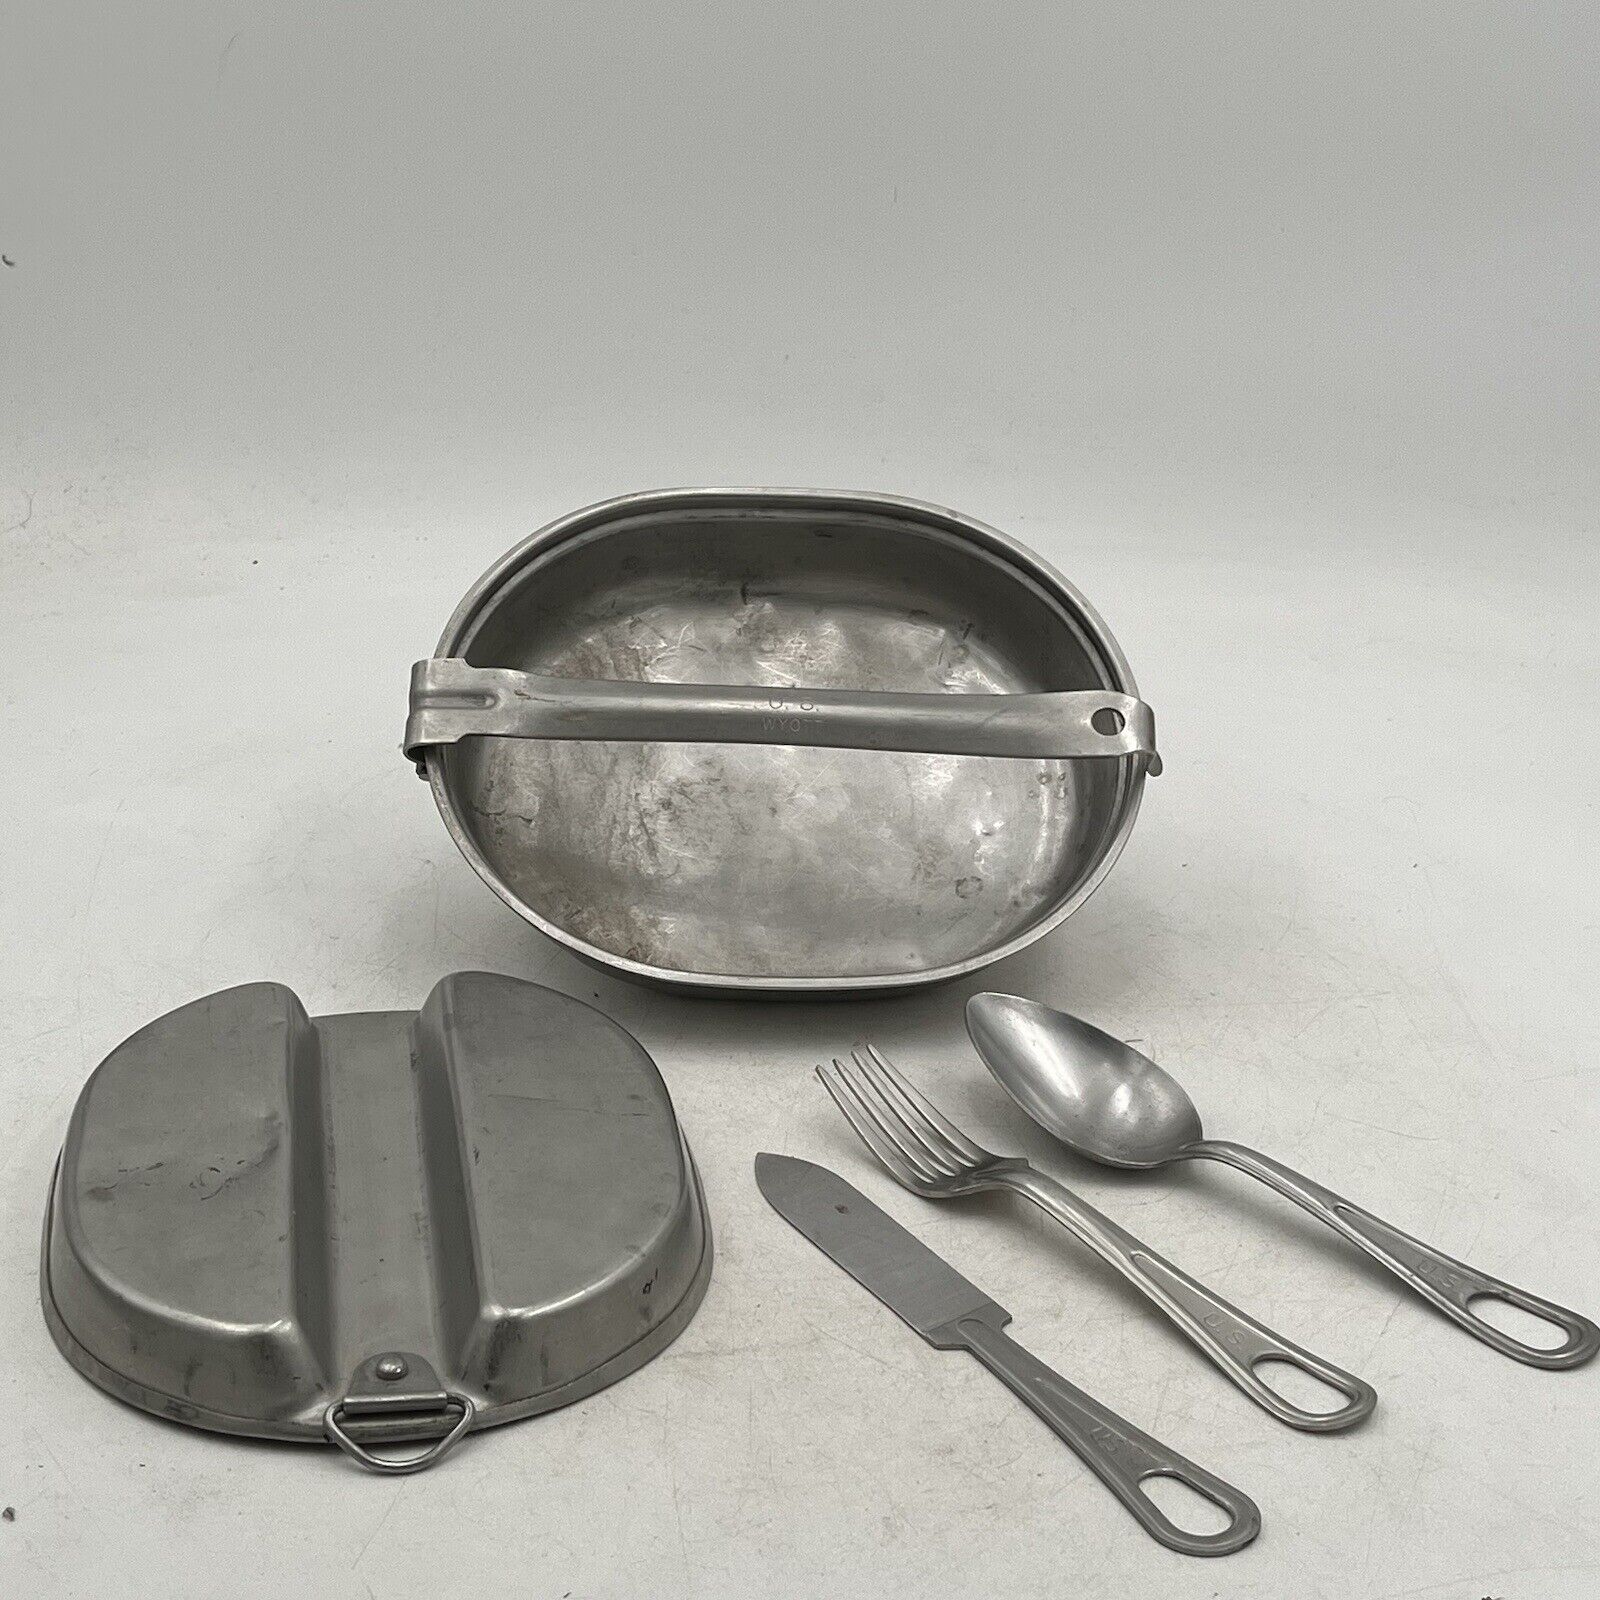 Original WW2 US Military Mess Kit Wyott Complete Utensils-Fork knife spoon WWII